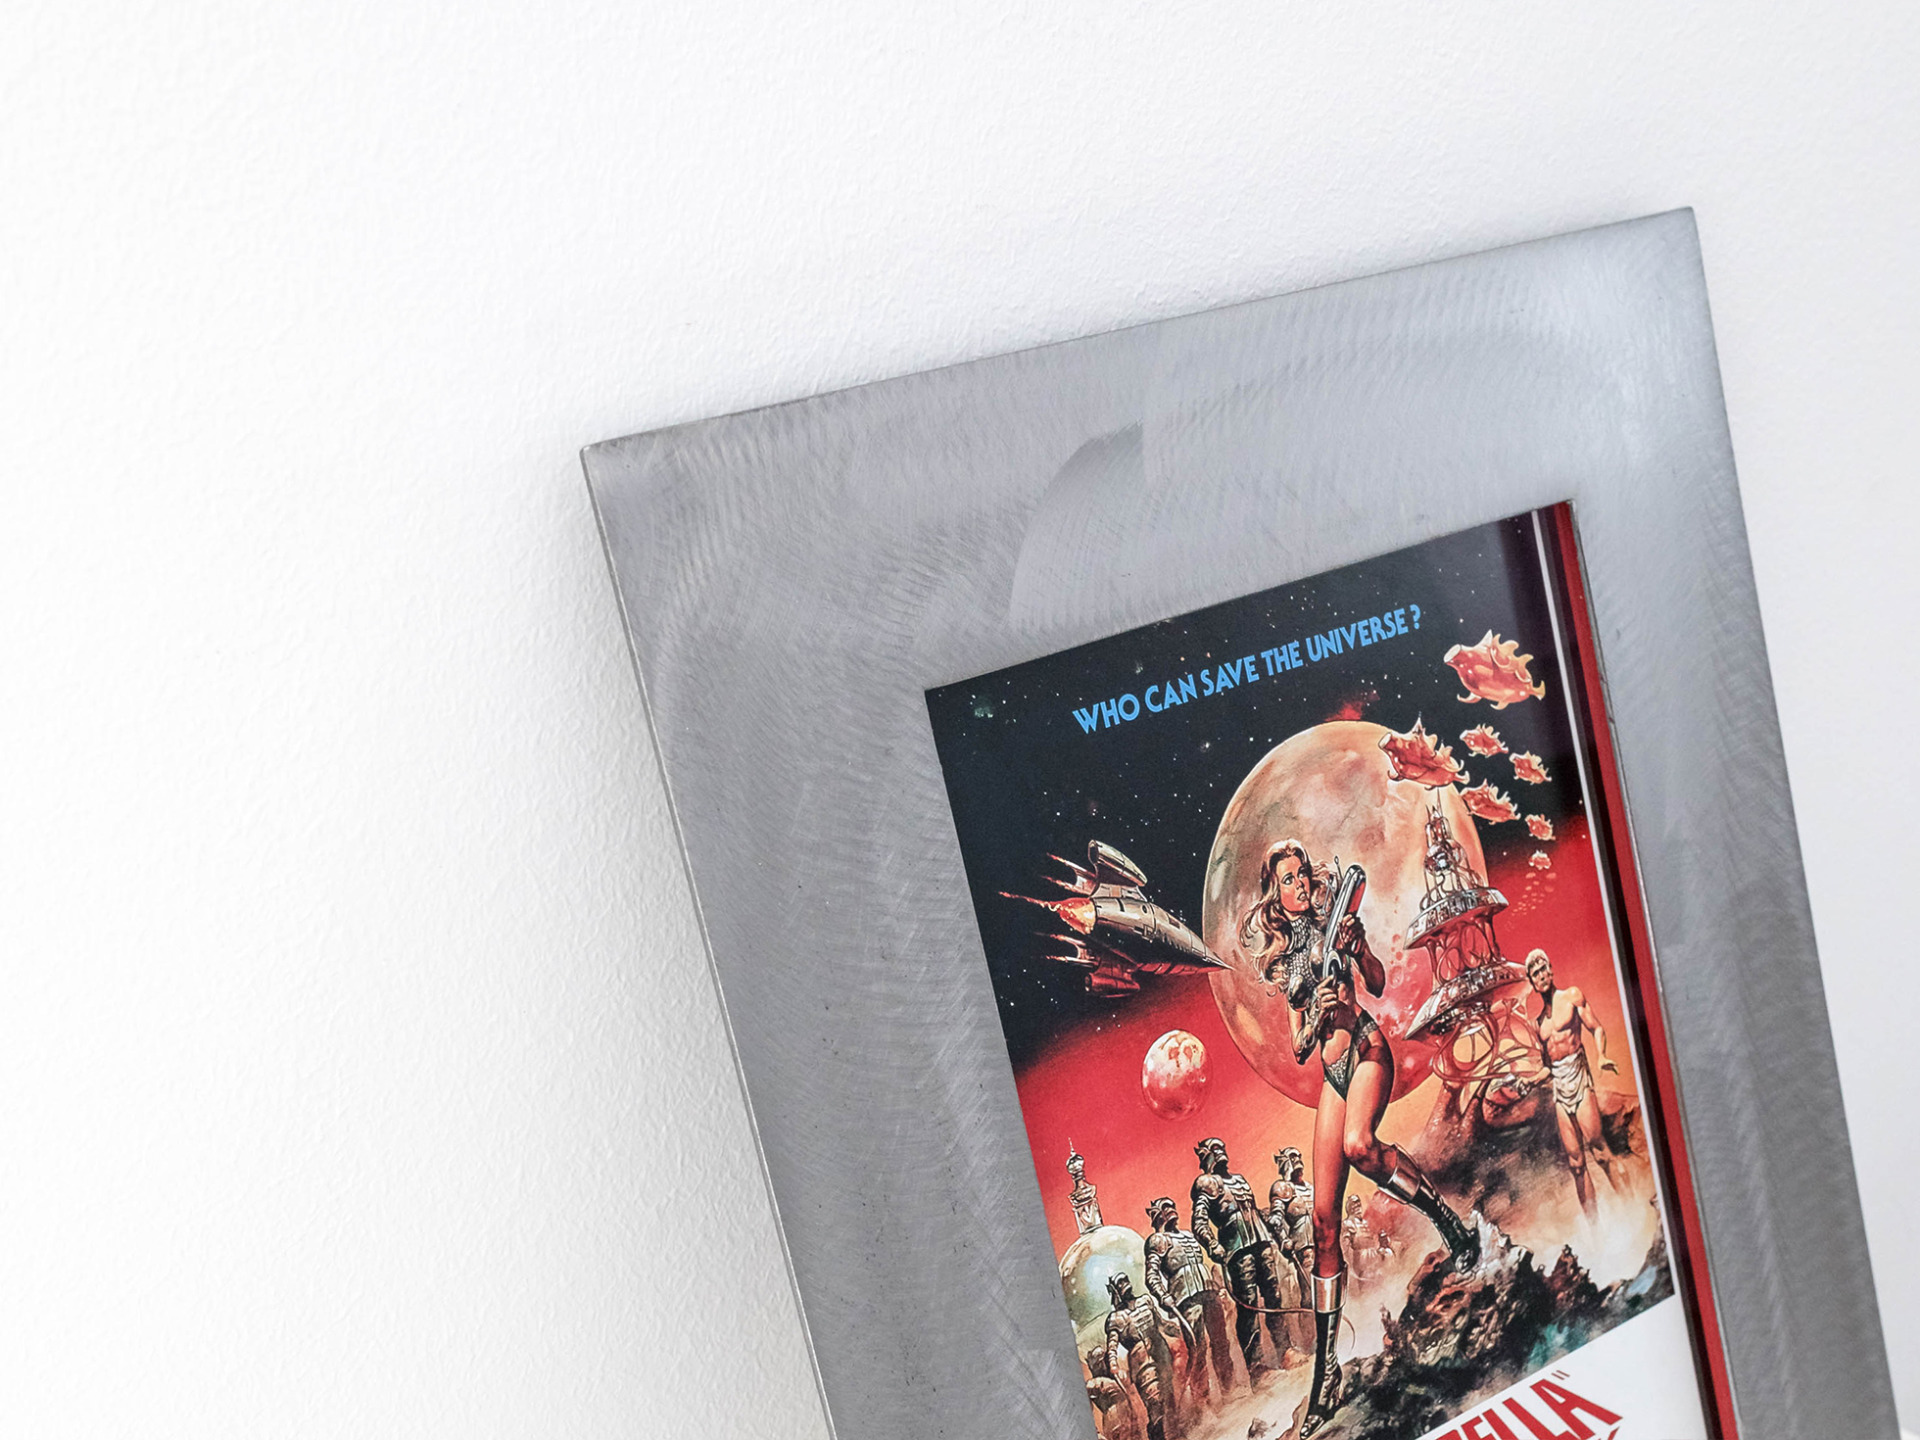 Details of a Barbarella movie poster framed in a wide, welded steel custom frame.